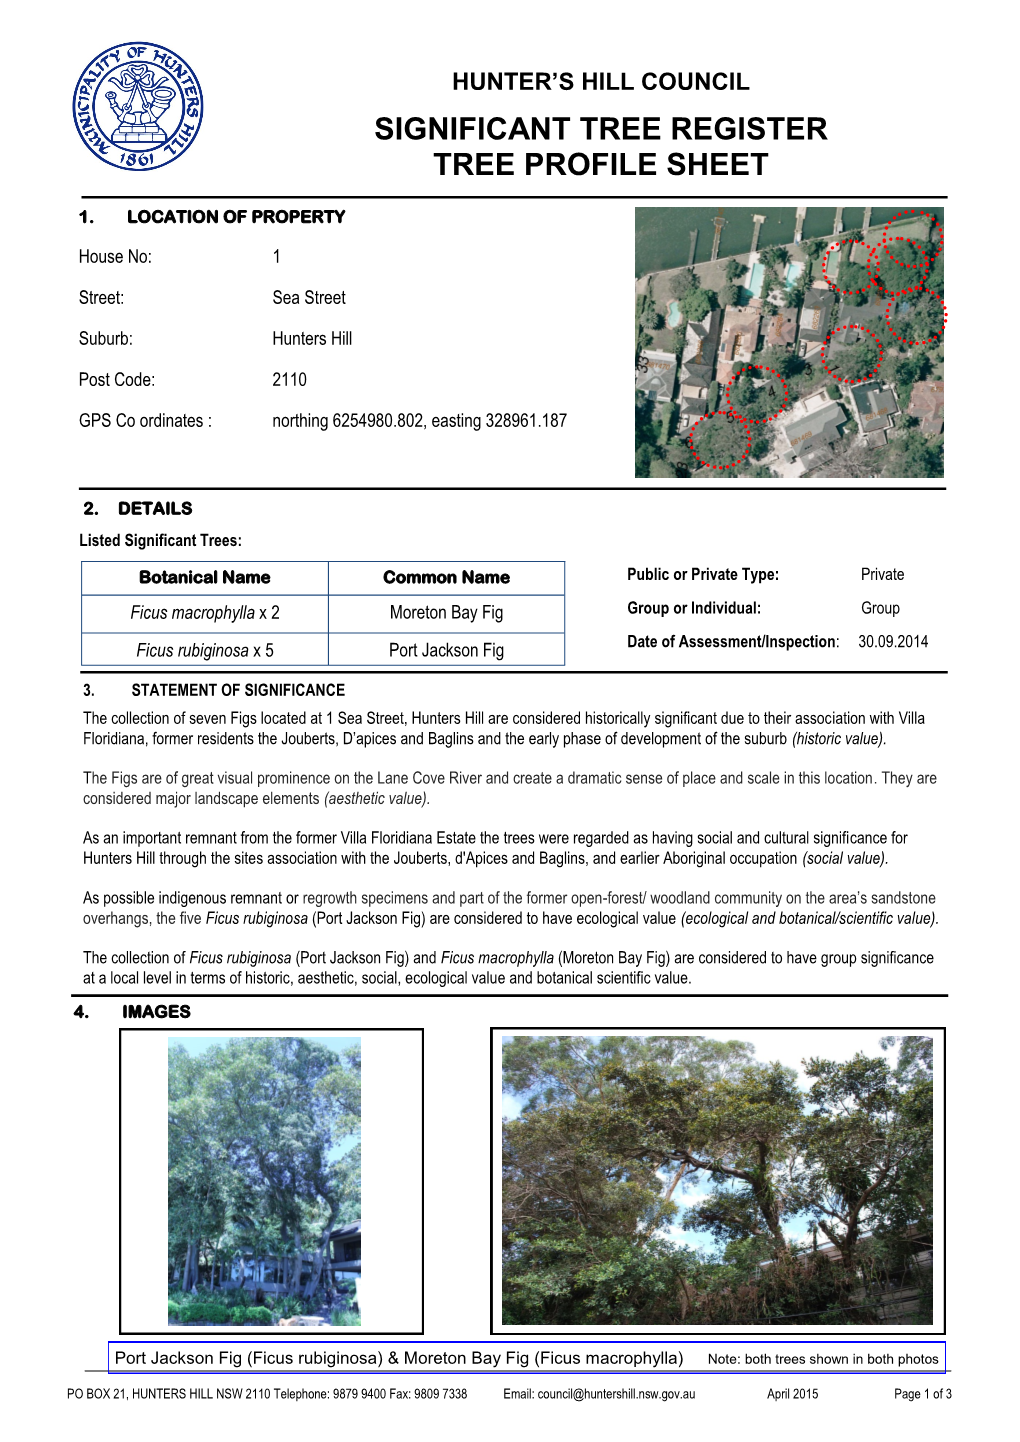 Port Jackson Fig Date of Assessment/Inspection: 30.09.2014